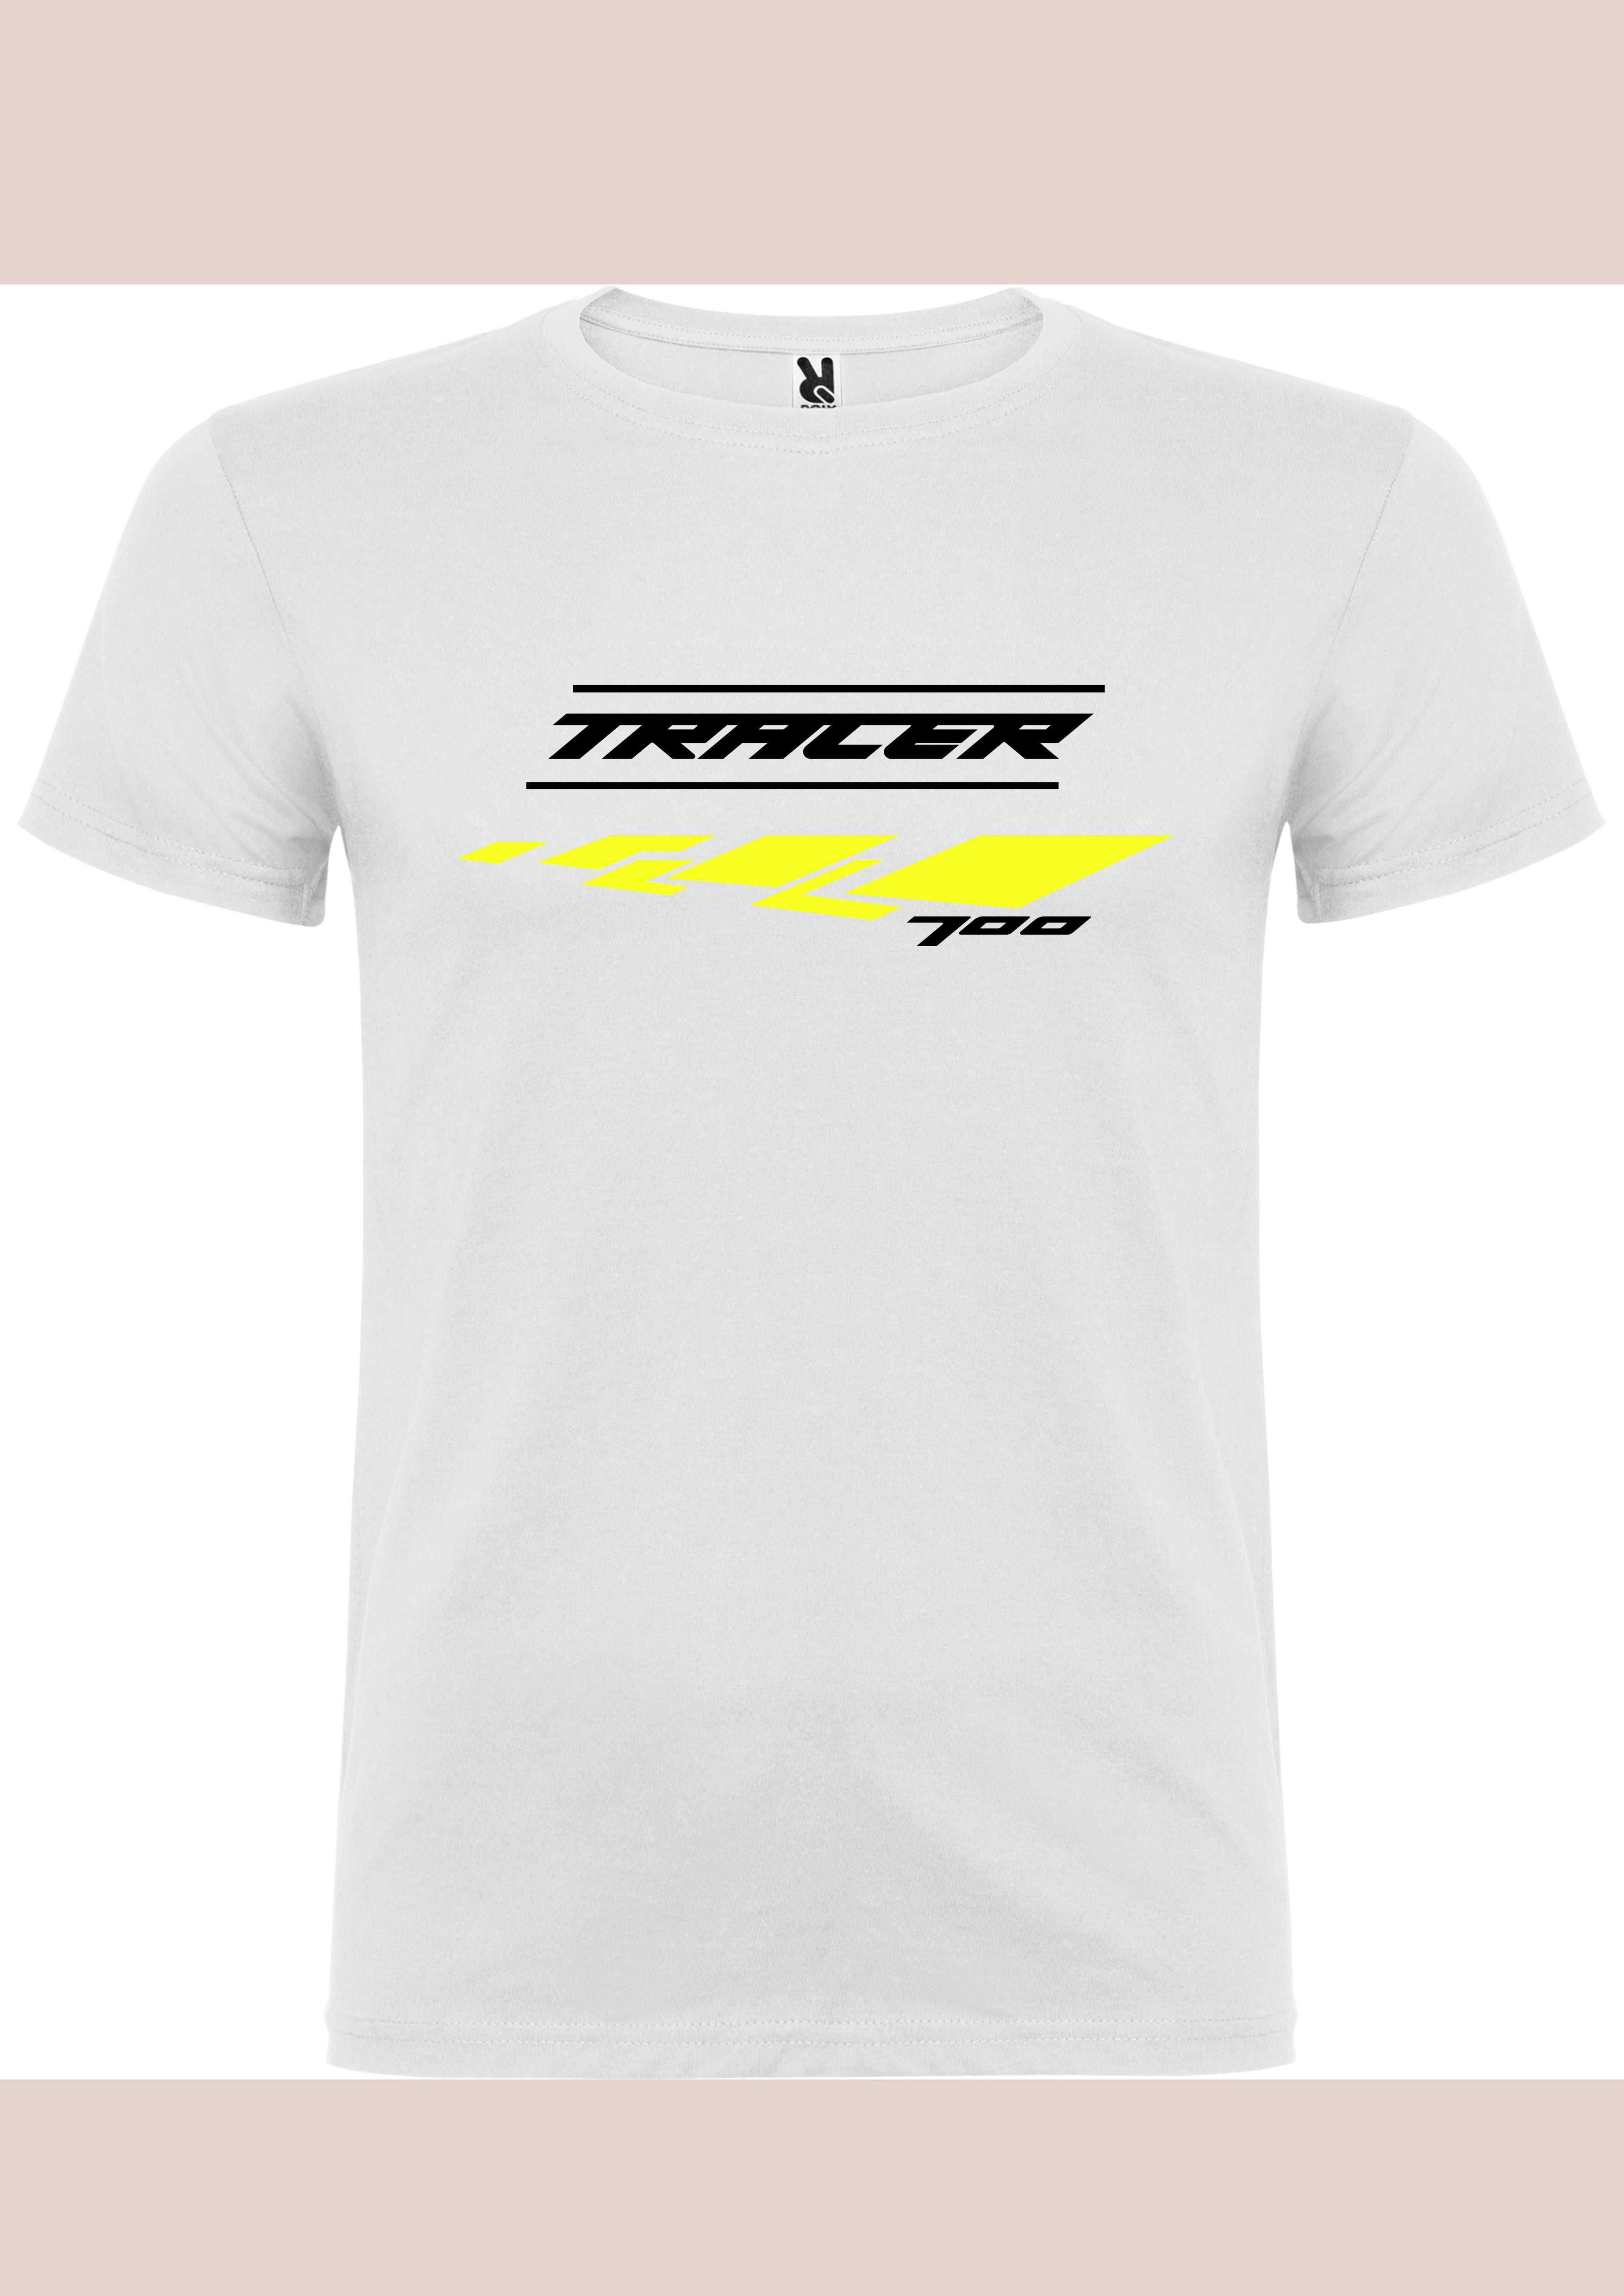 T-shirt Yamaha Tracer 700